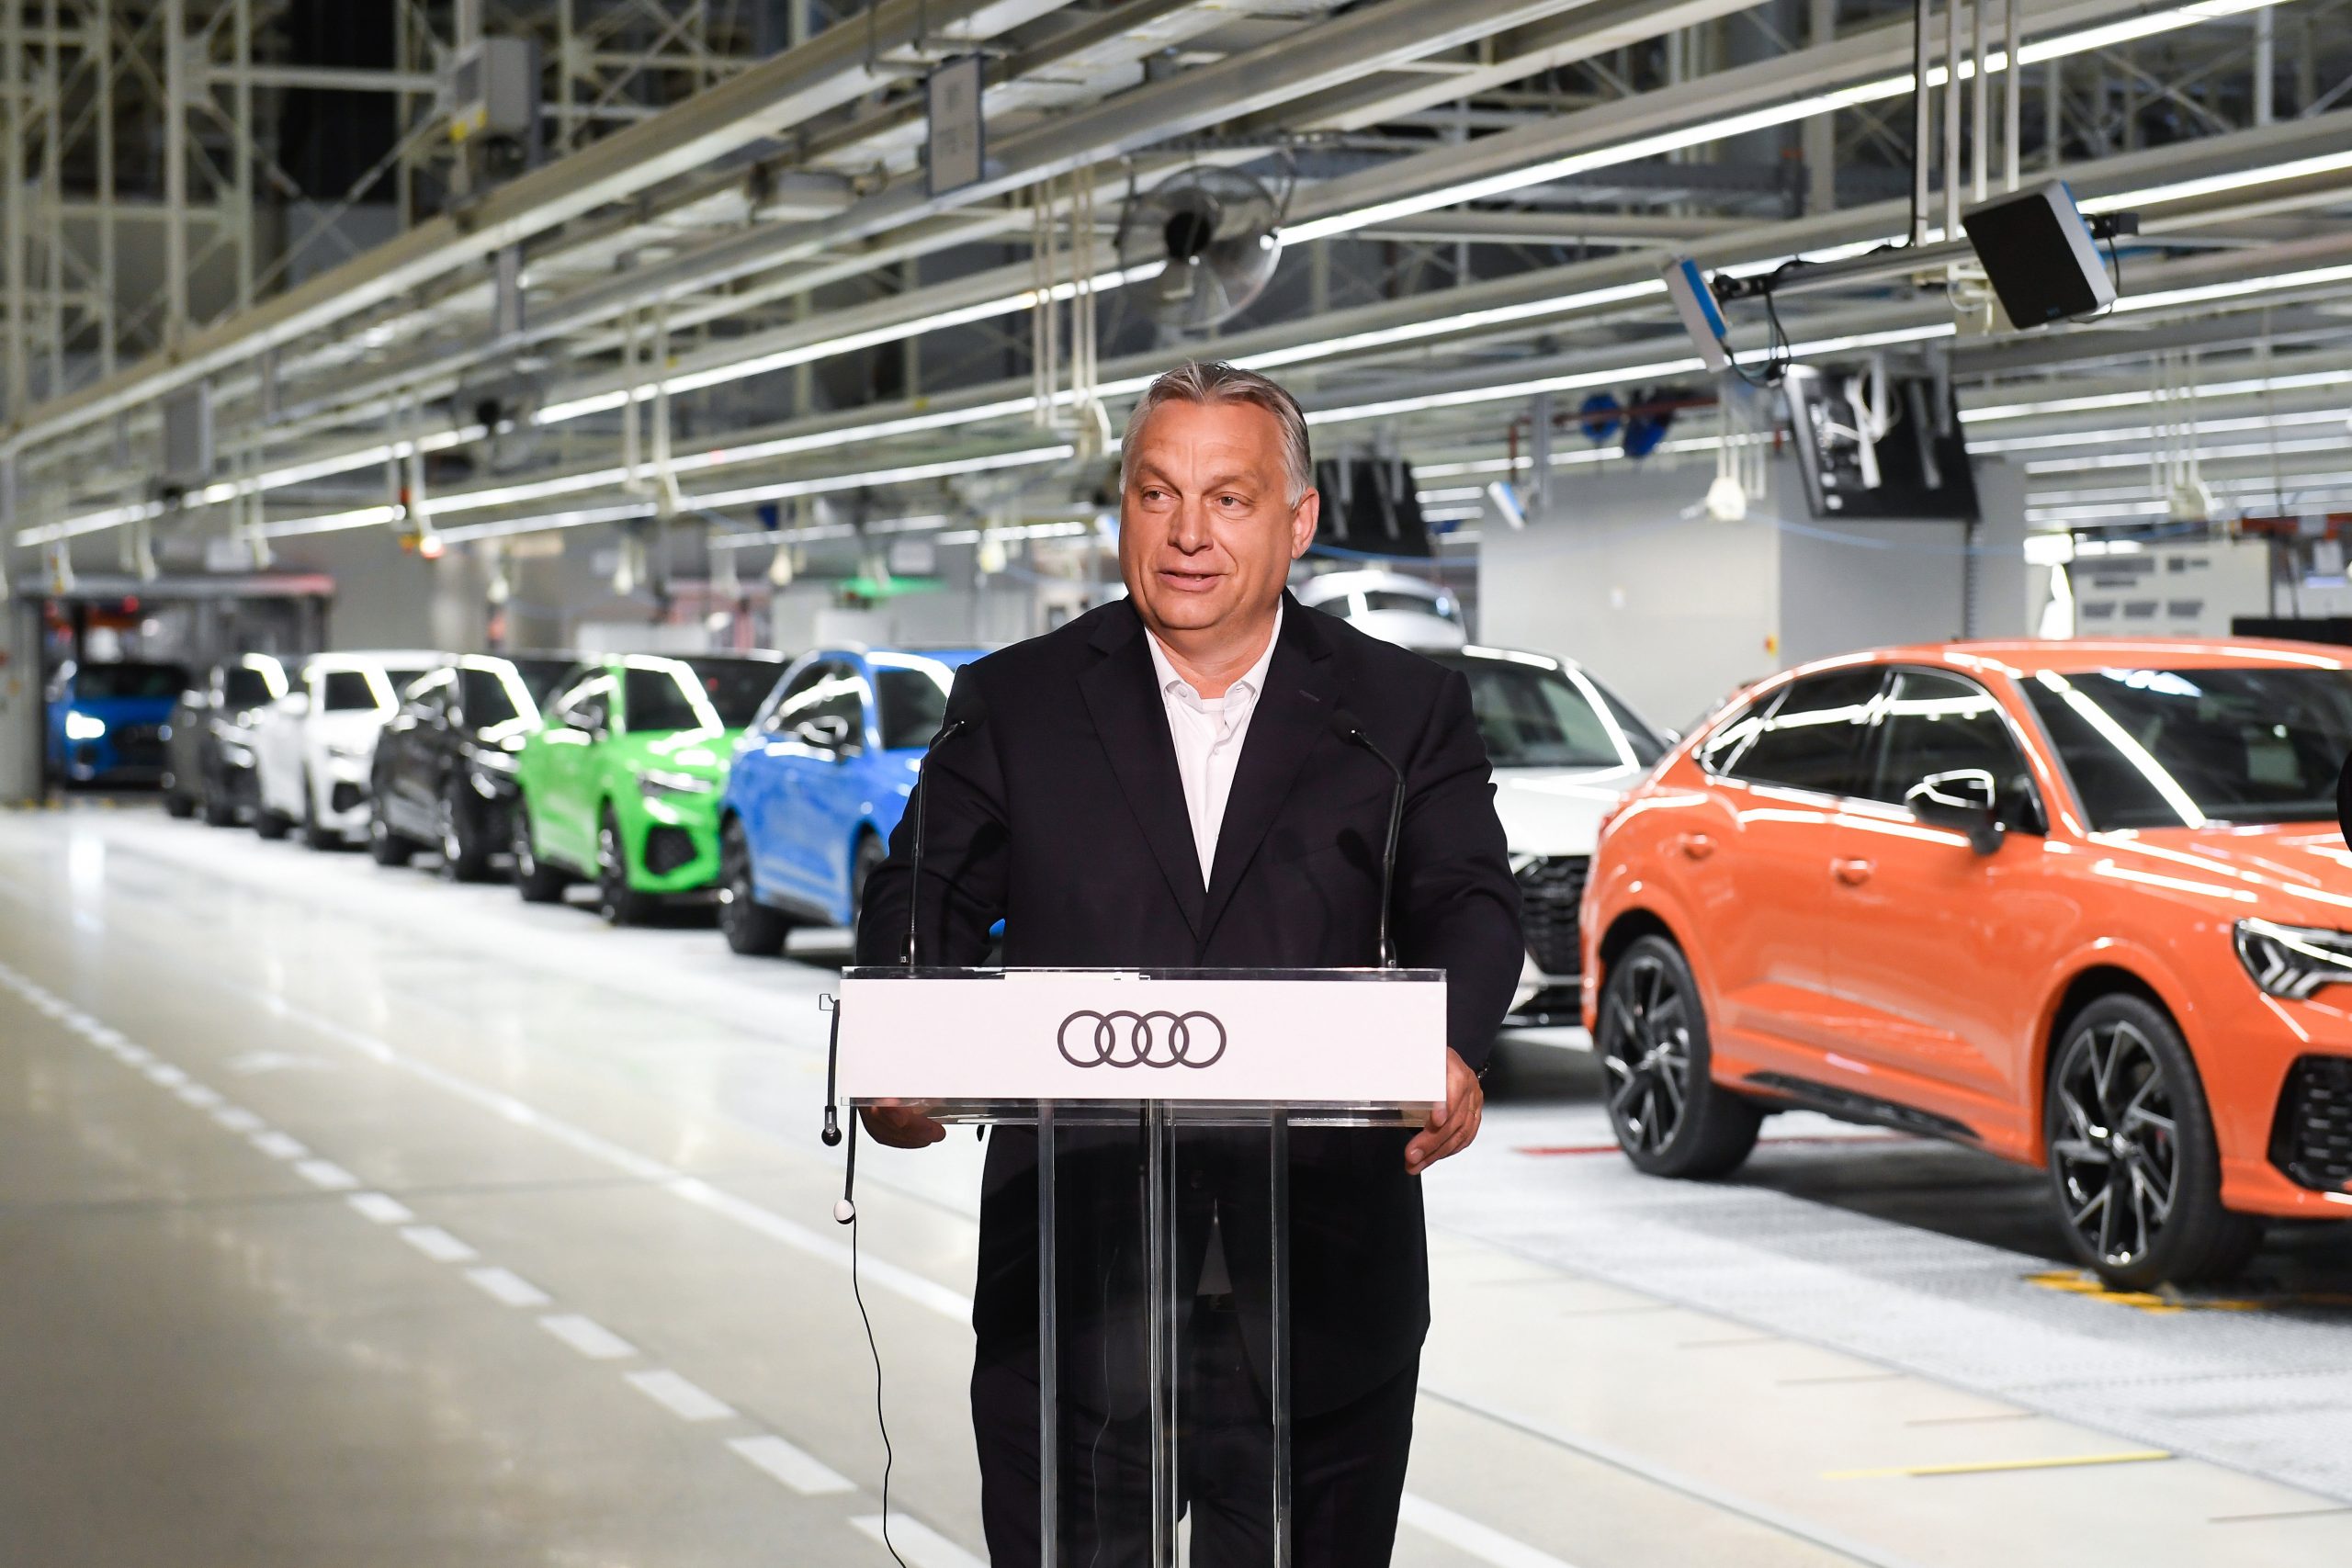 Coronavirus - Orbán Visiting Audi: Rebooting Economy Requires Major Gov't Support